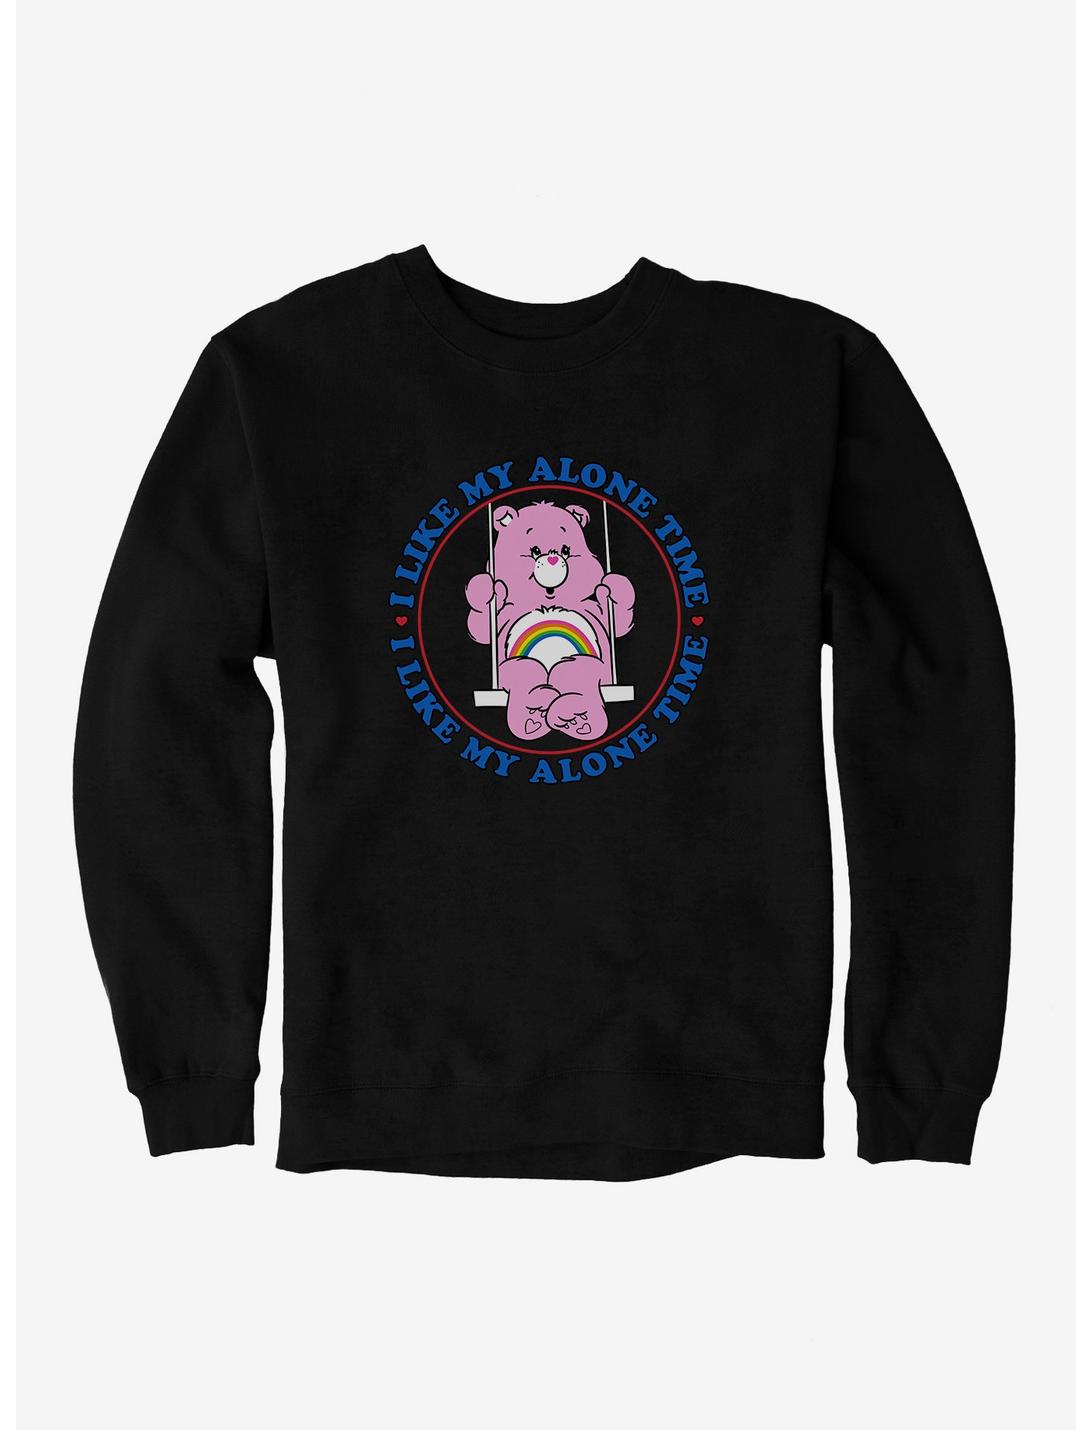 Care Bears Alone Time Sweatshirt, , hi-res